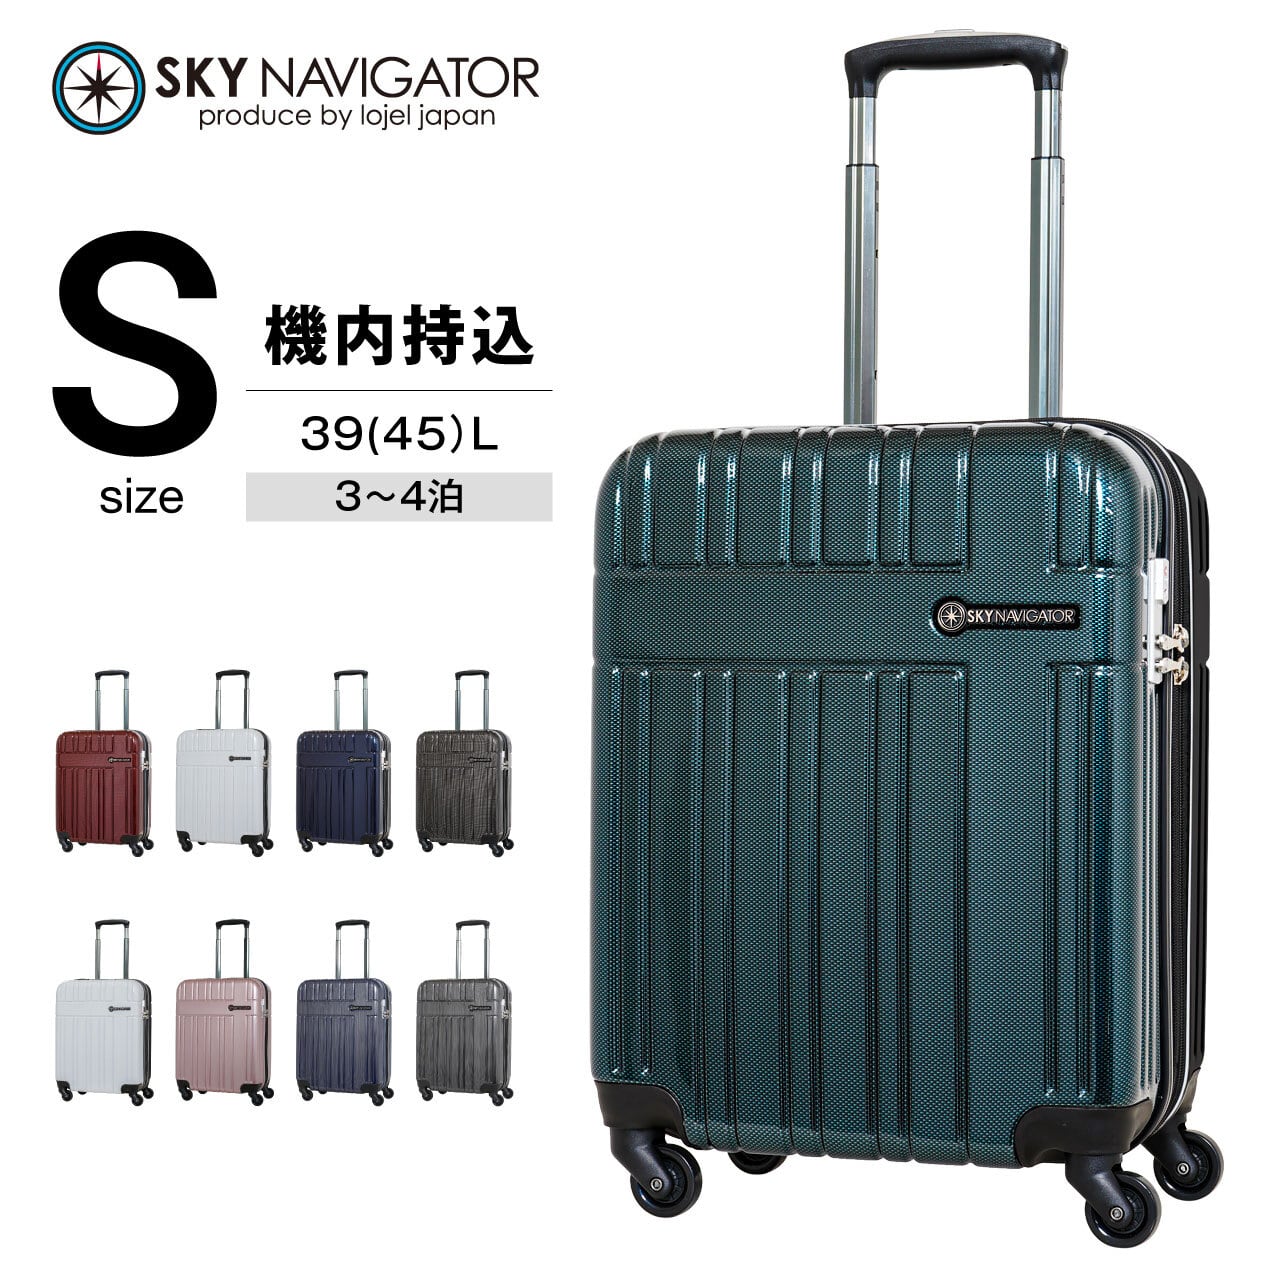 SK-0835-48 SKYNAVIGATOR スーツケース Sサイズ 機内持ち込み 拡張